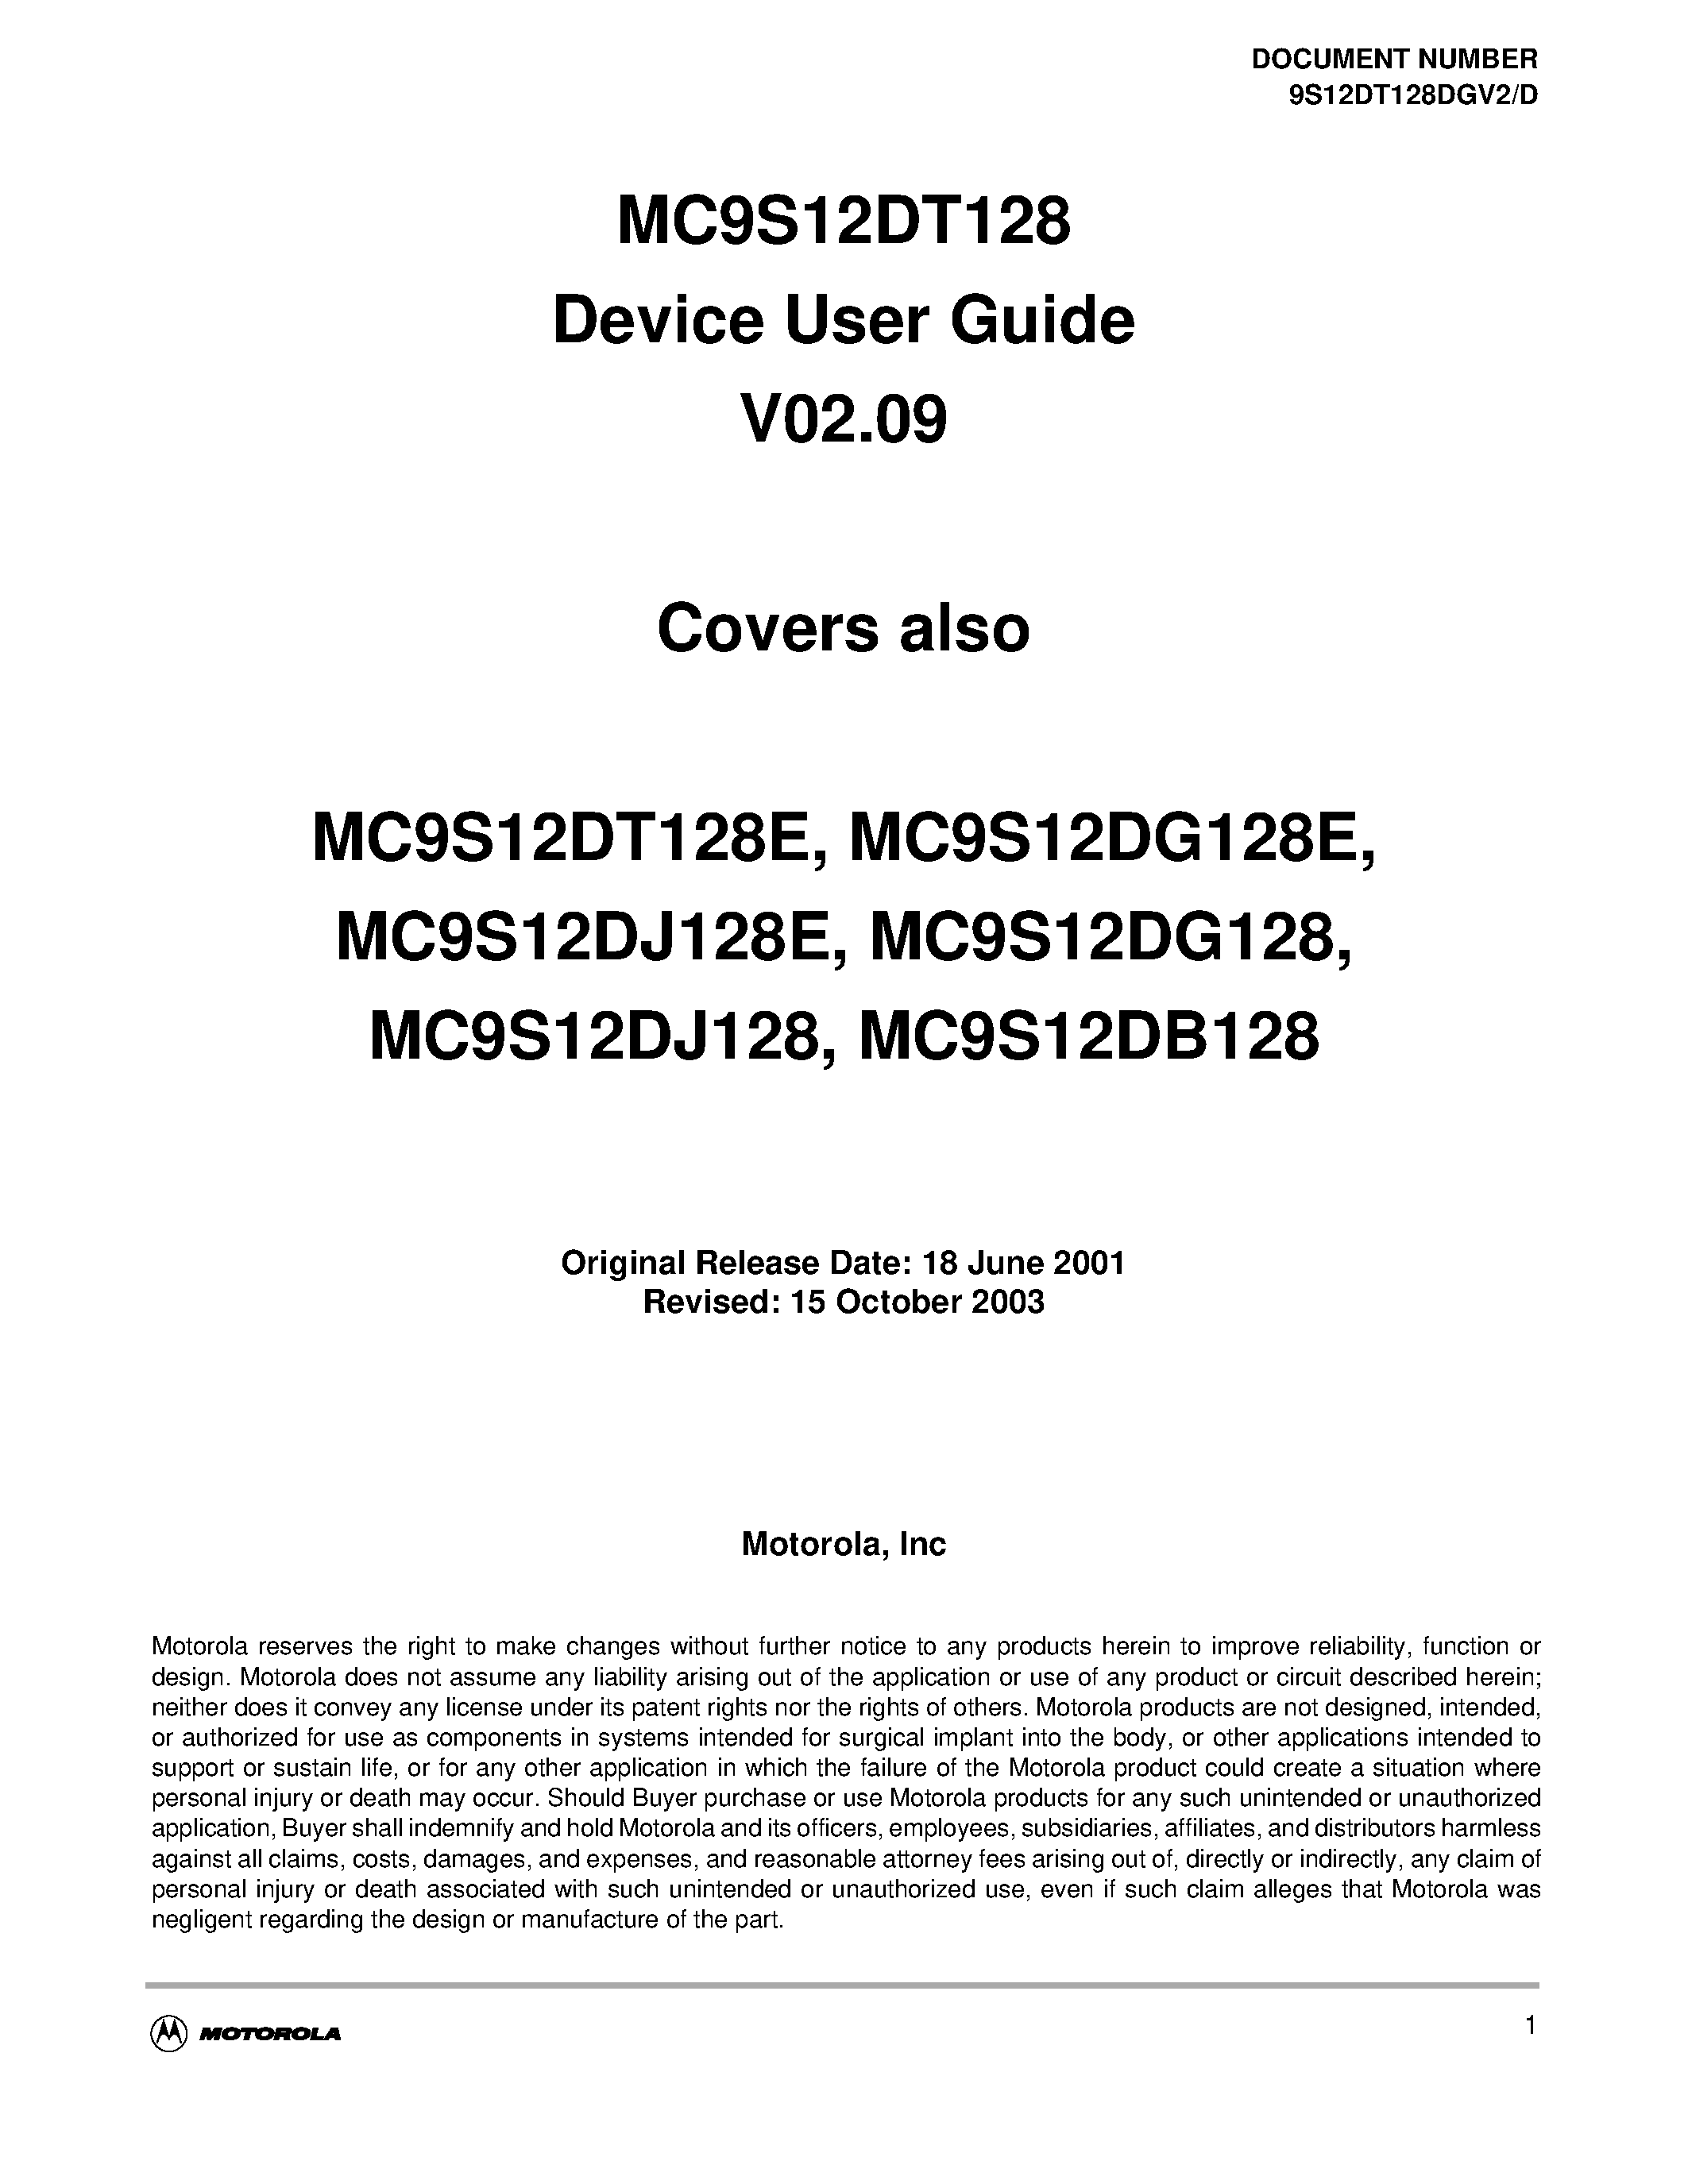 Даташит S12SPIV2 - MC9S12DT128 Device User Guide V02.09 страница 1